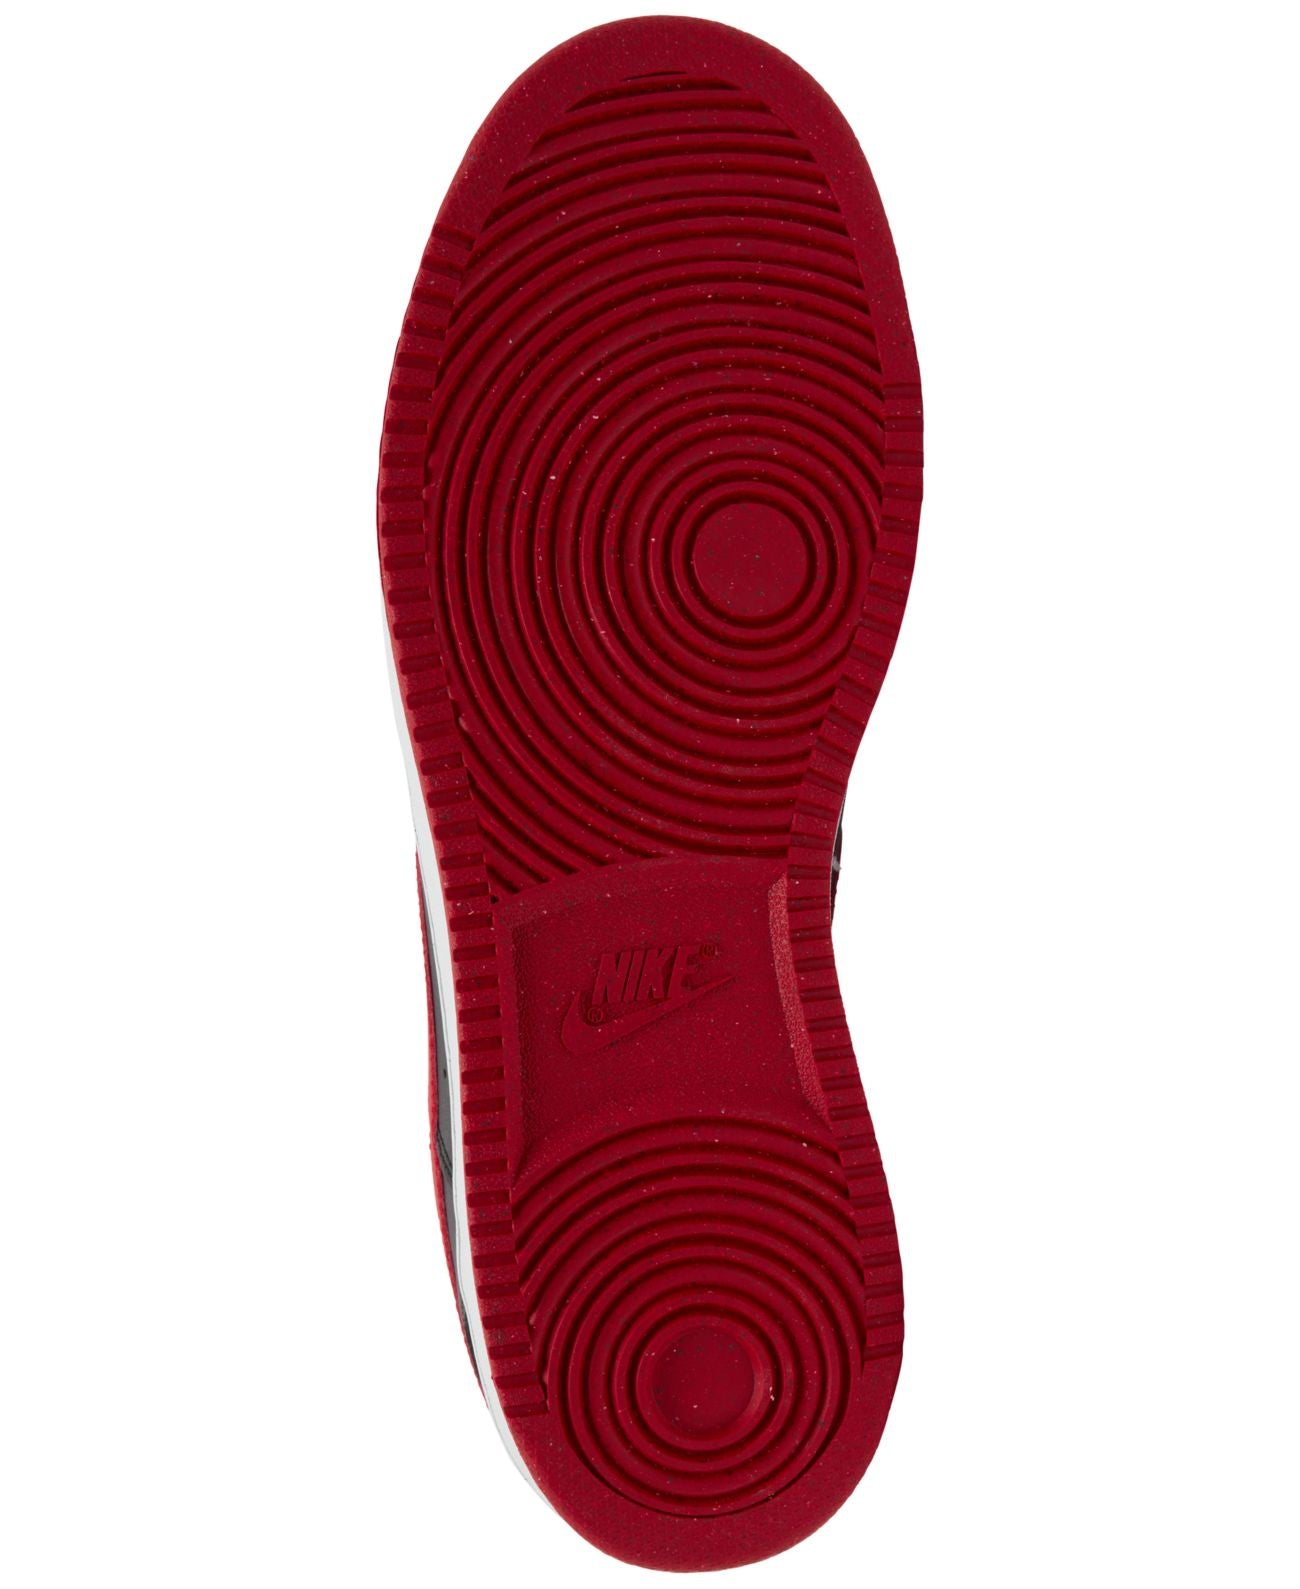 Nike Mens Court Vision Low Sneaker,Black/University Red